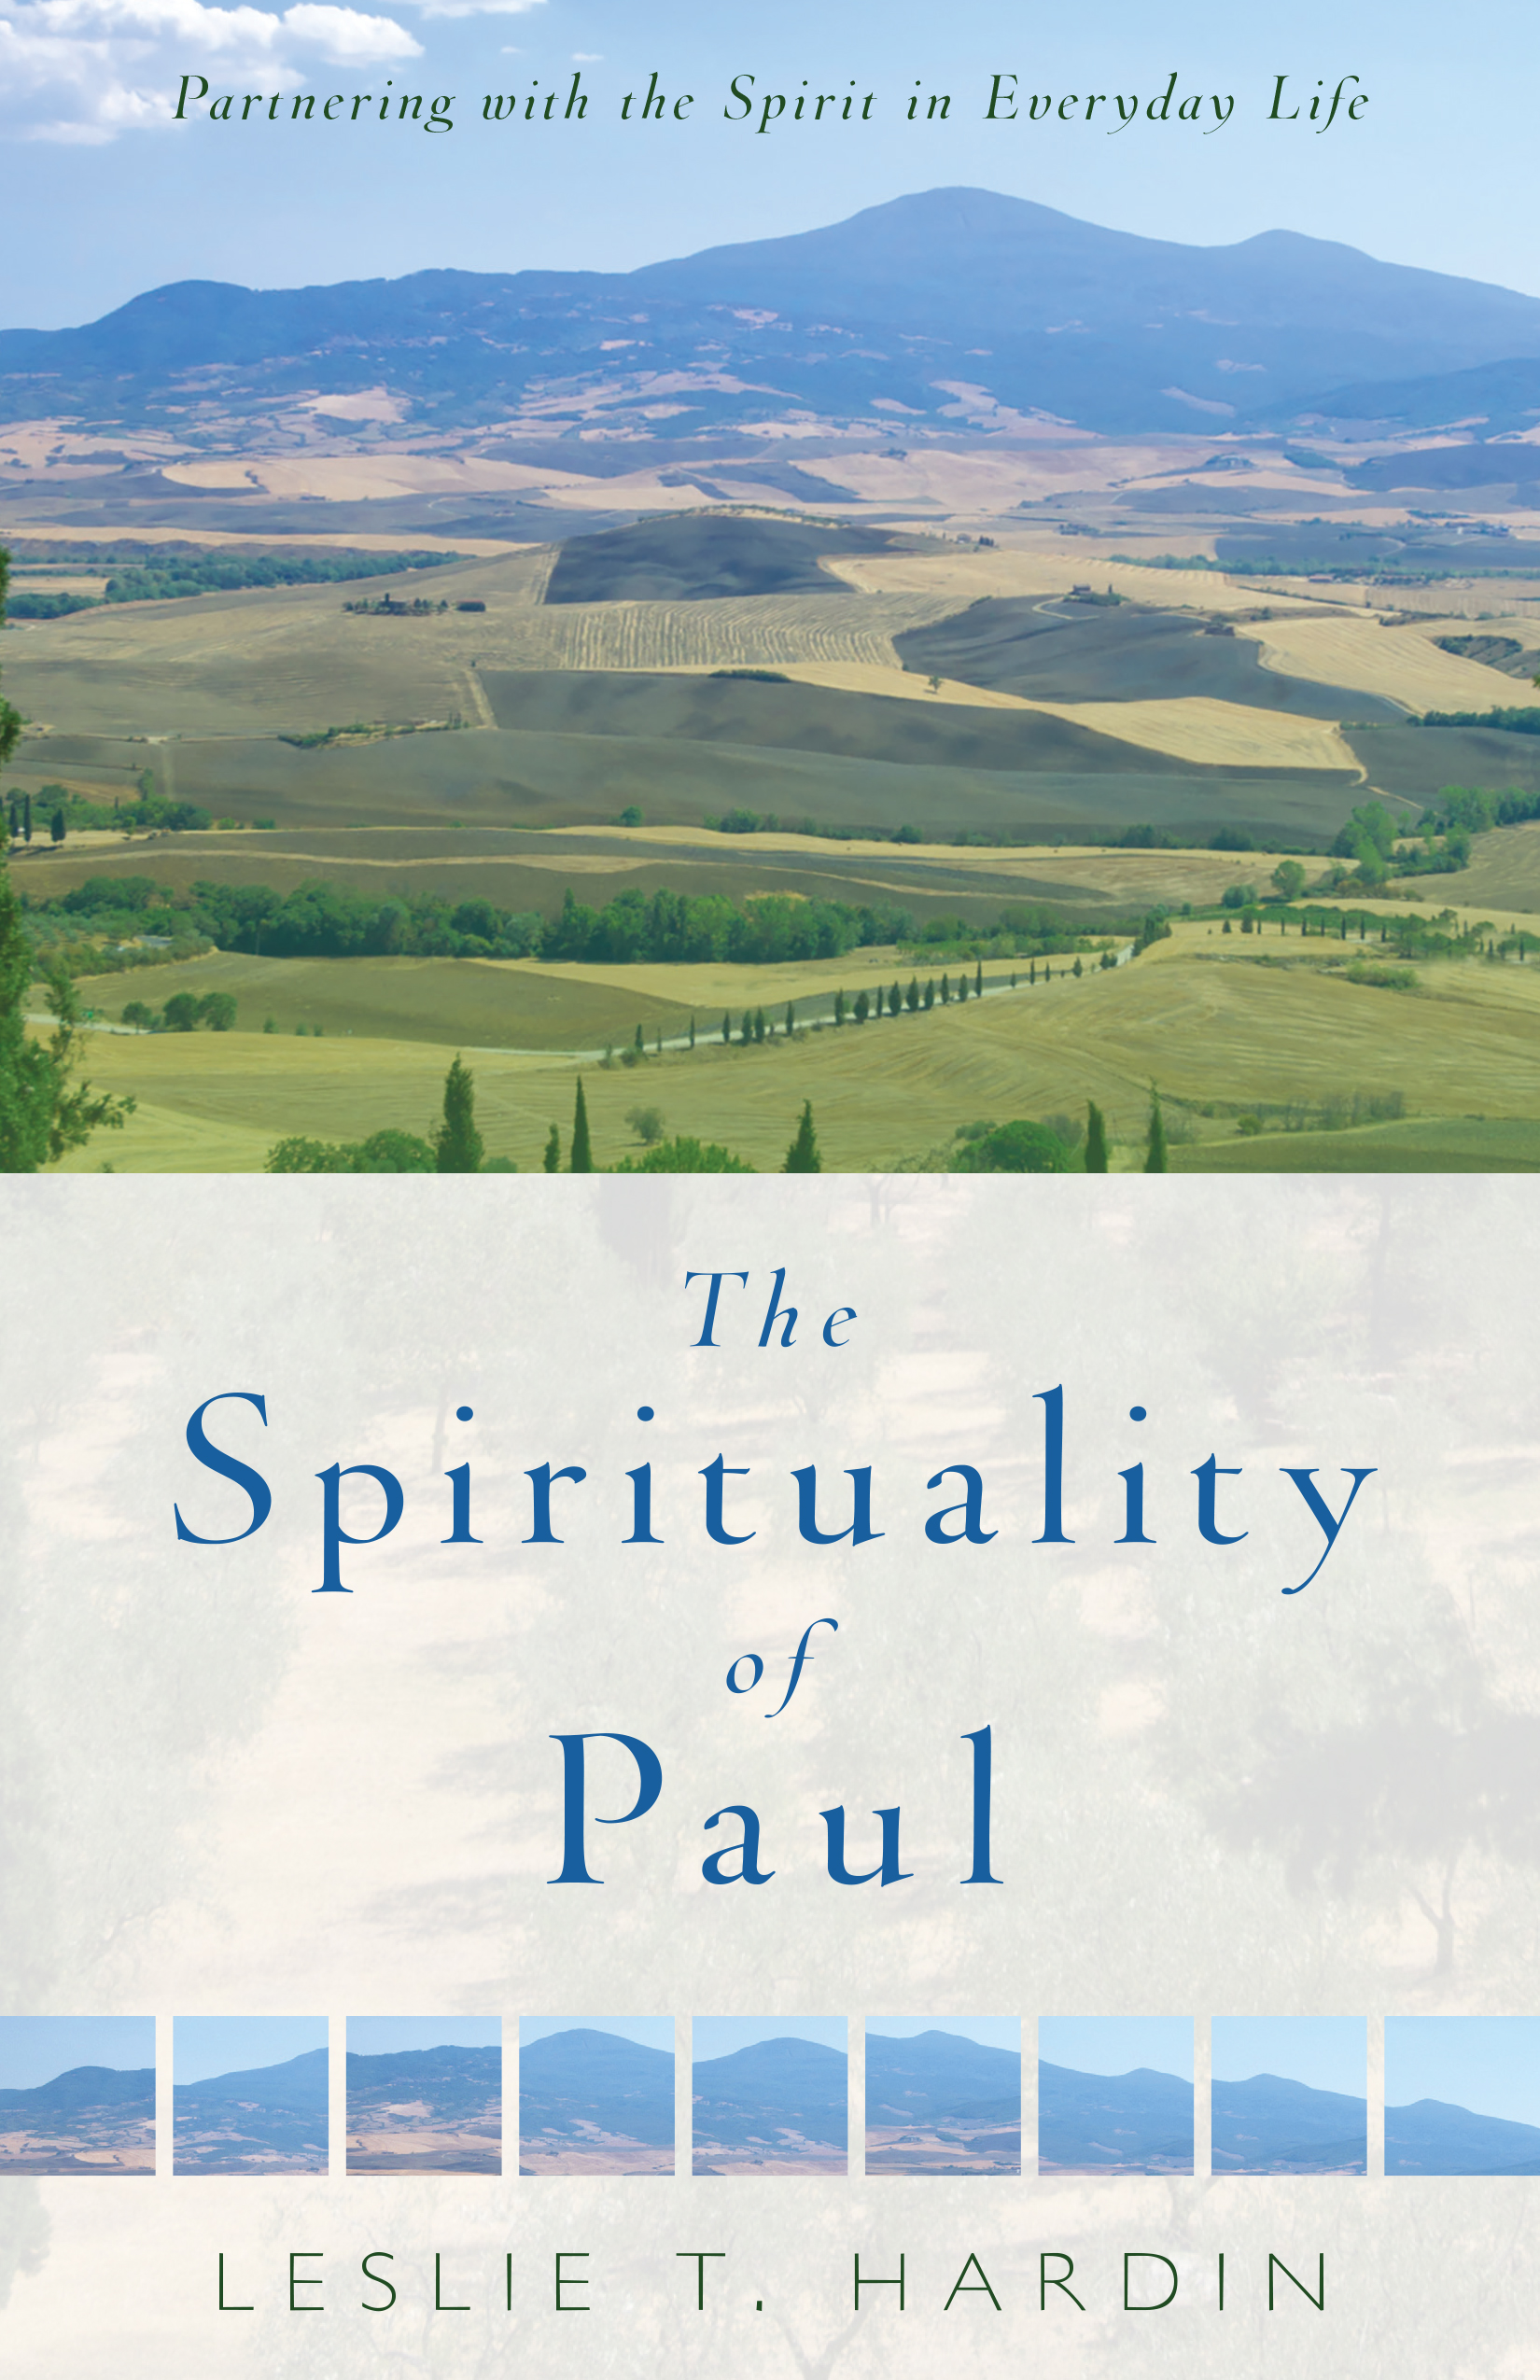 The Spirituality of Paul